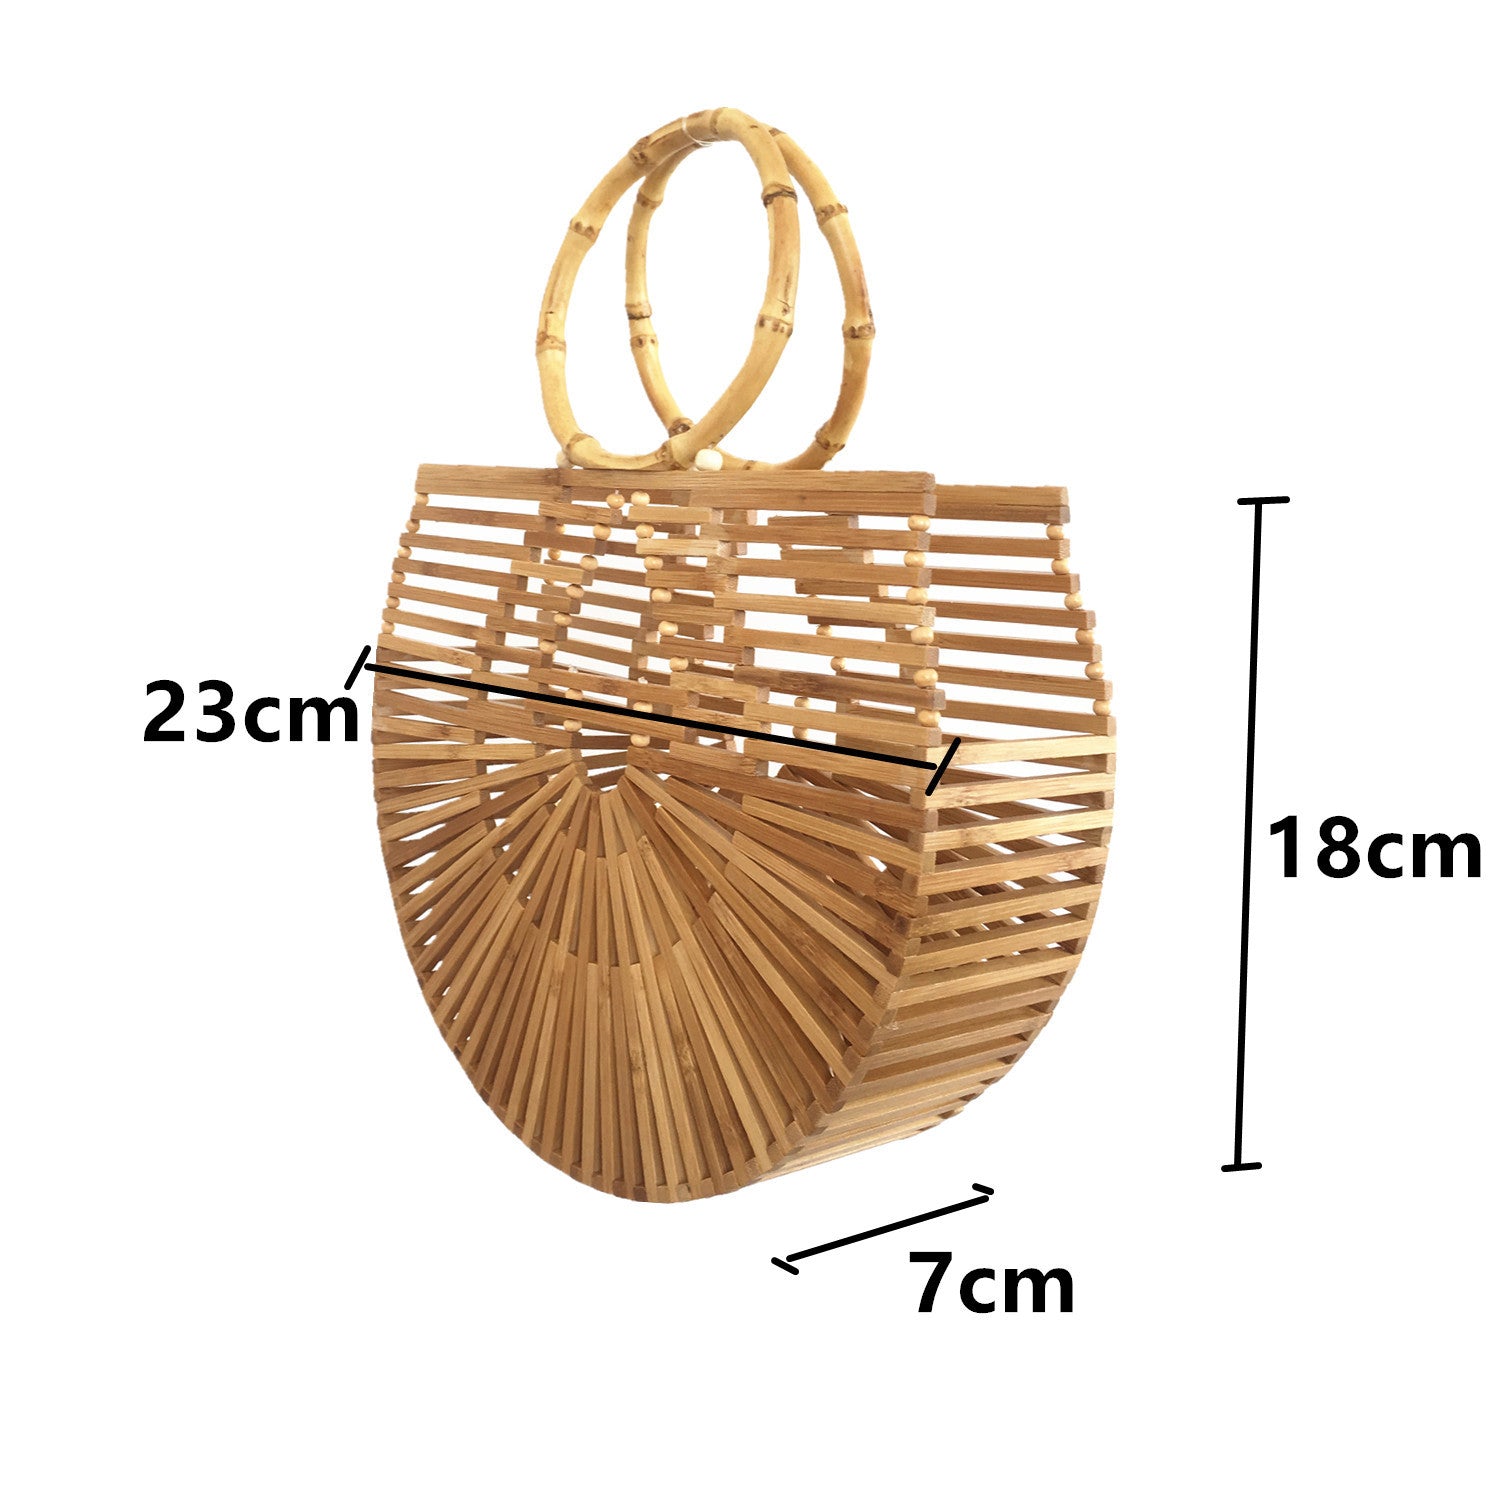 Popular Bamboo Beach Bag for the Holidays - BELLADONNA